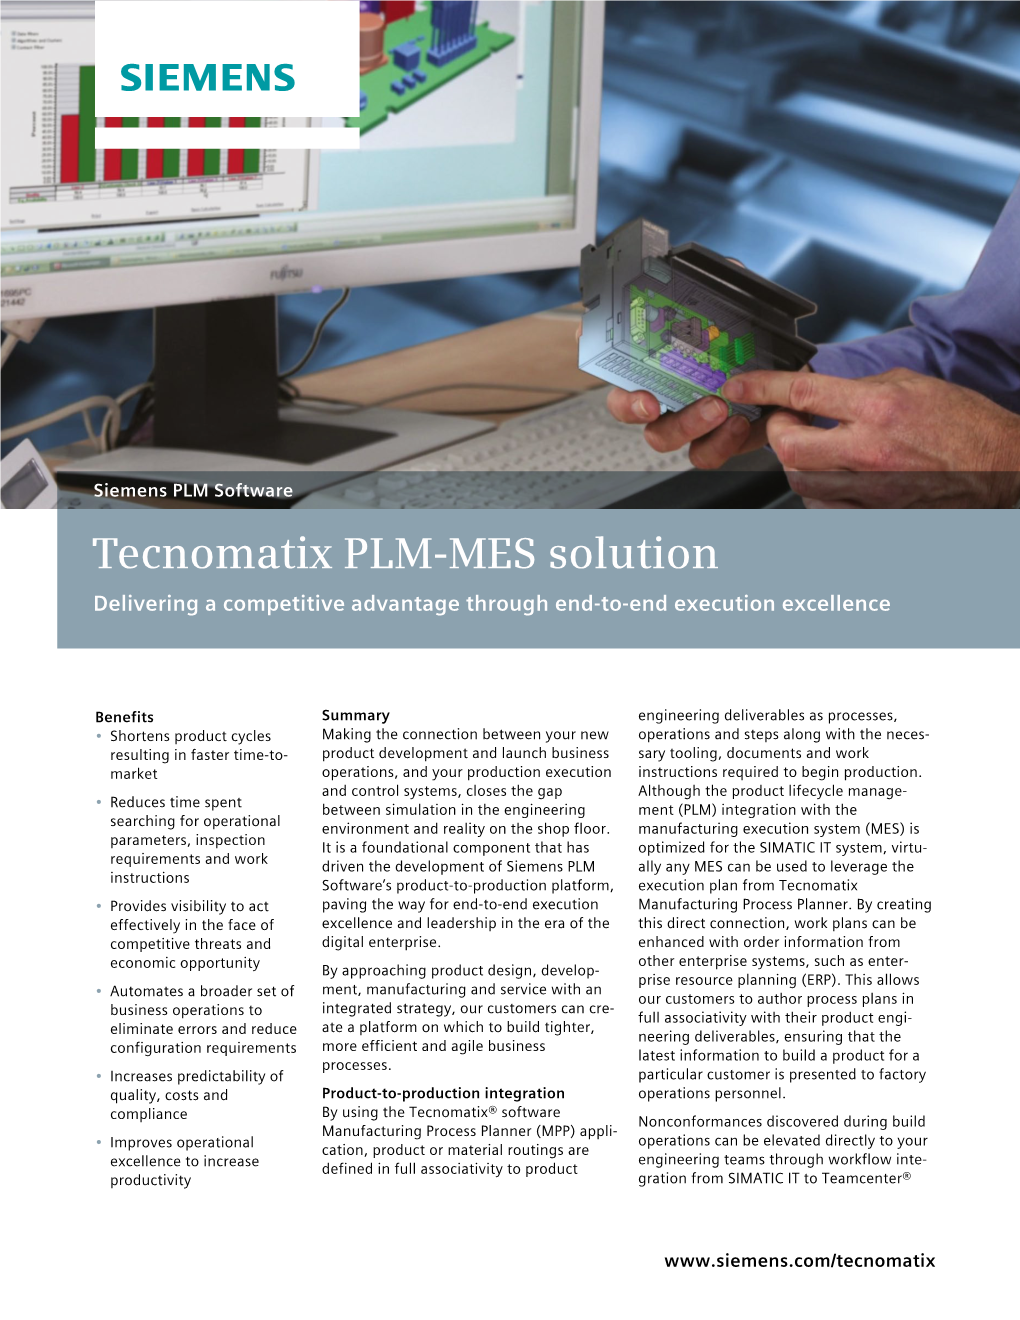 Tecnomatix PLM-MES Solution Fact Sheet